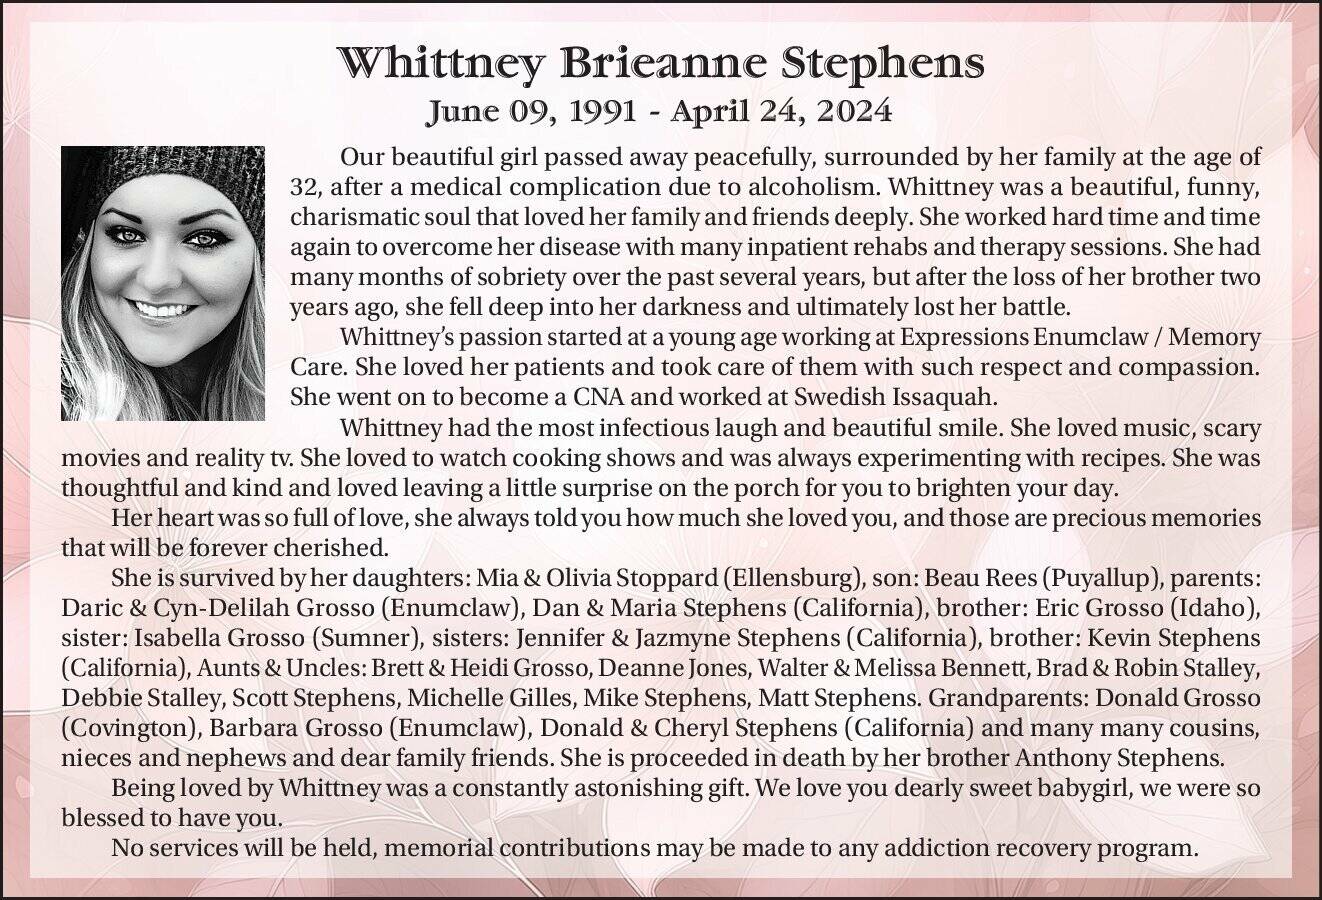 Obit for Whittney Stephens